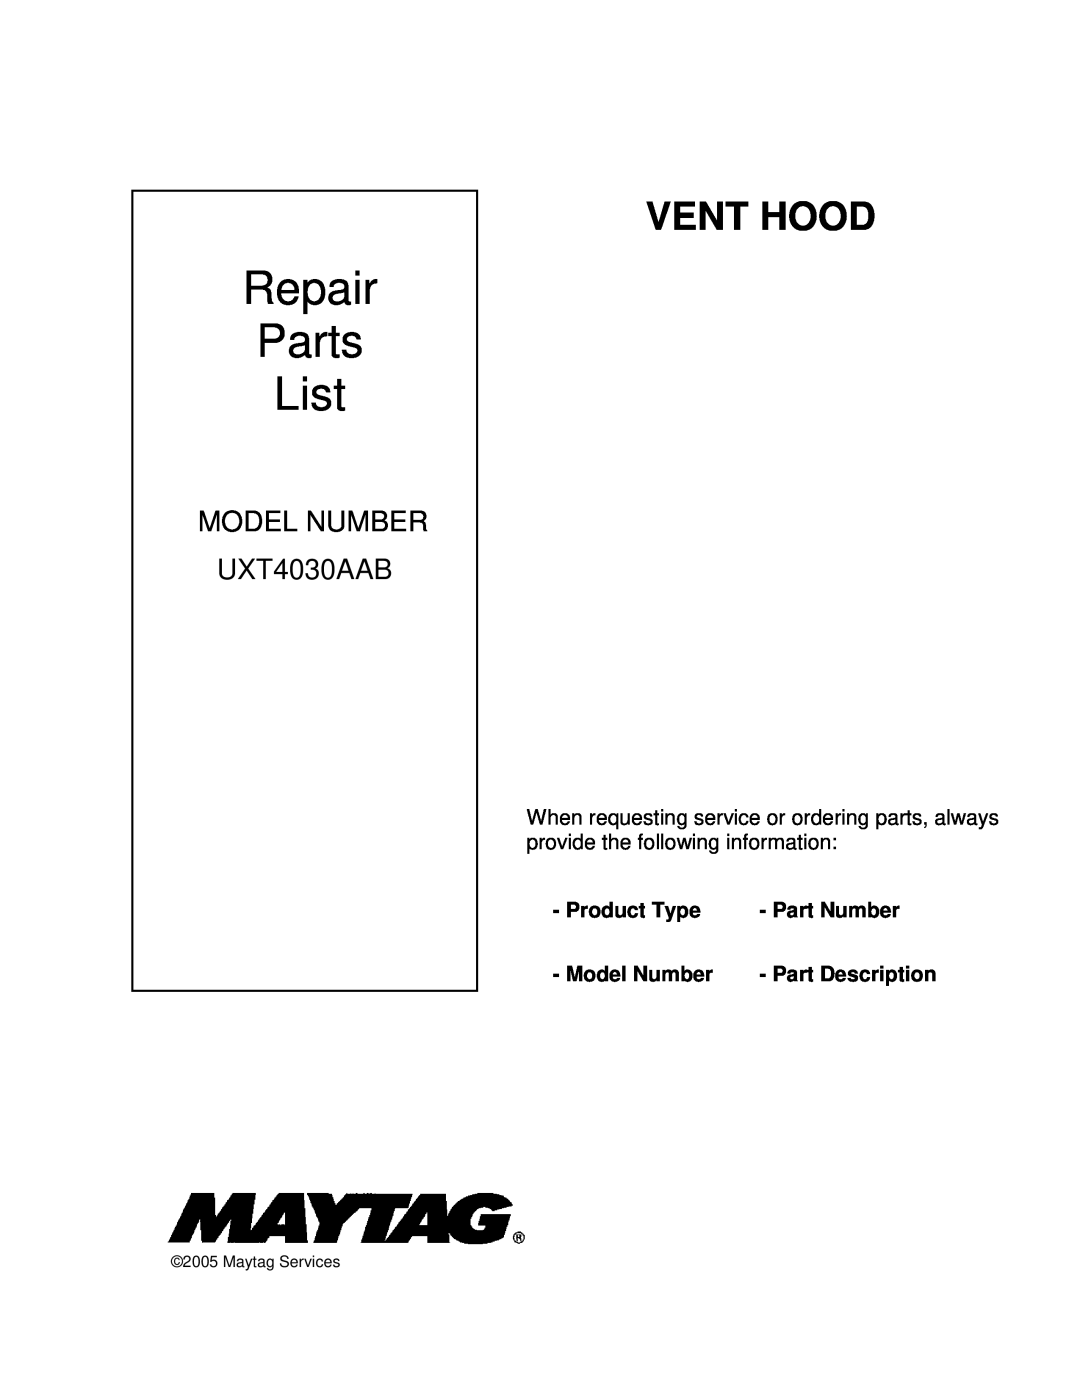 Whirlpool UXT4030AAB manual Product Type, Part Number, Model Number, Part Description, Repair Parts List, Vent Hood 